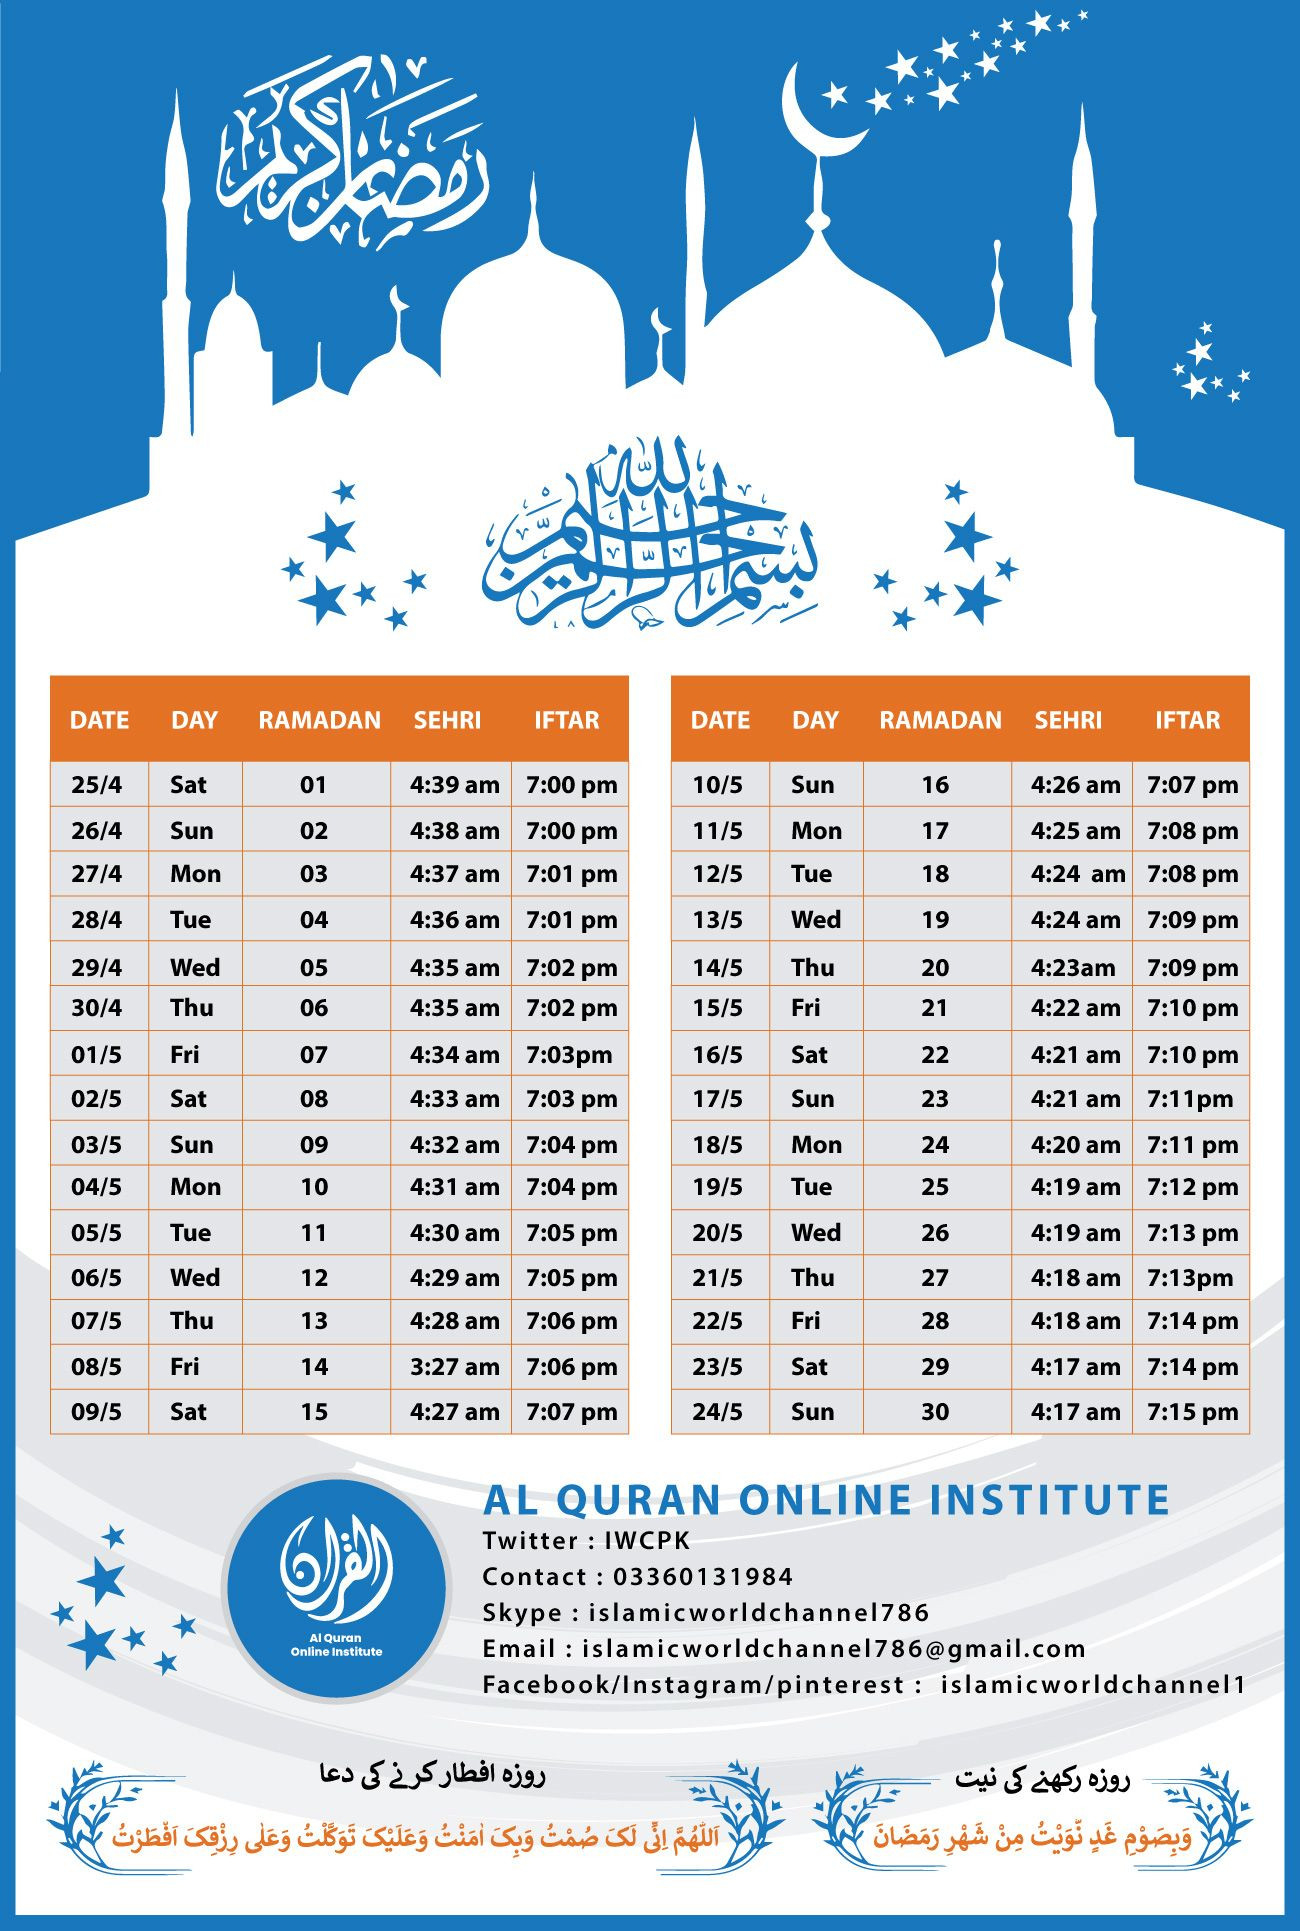 Ramadan 2020 Time Table India Image - Ramadom-Calendar 2022 With Islamic Dates